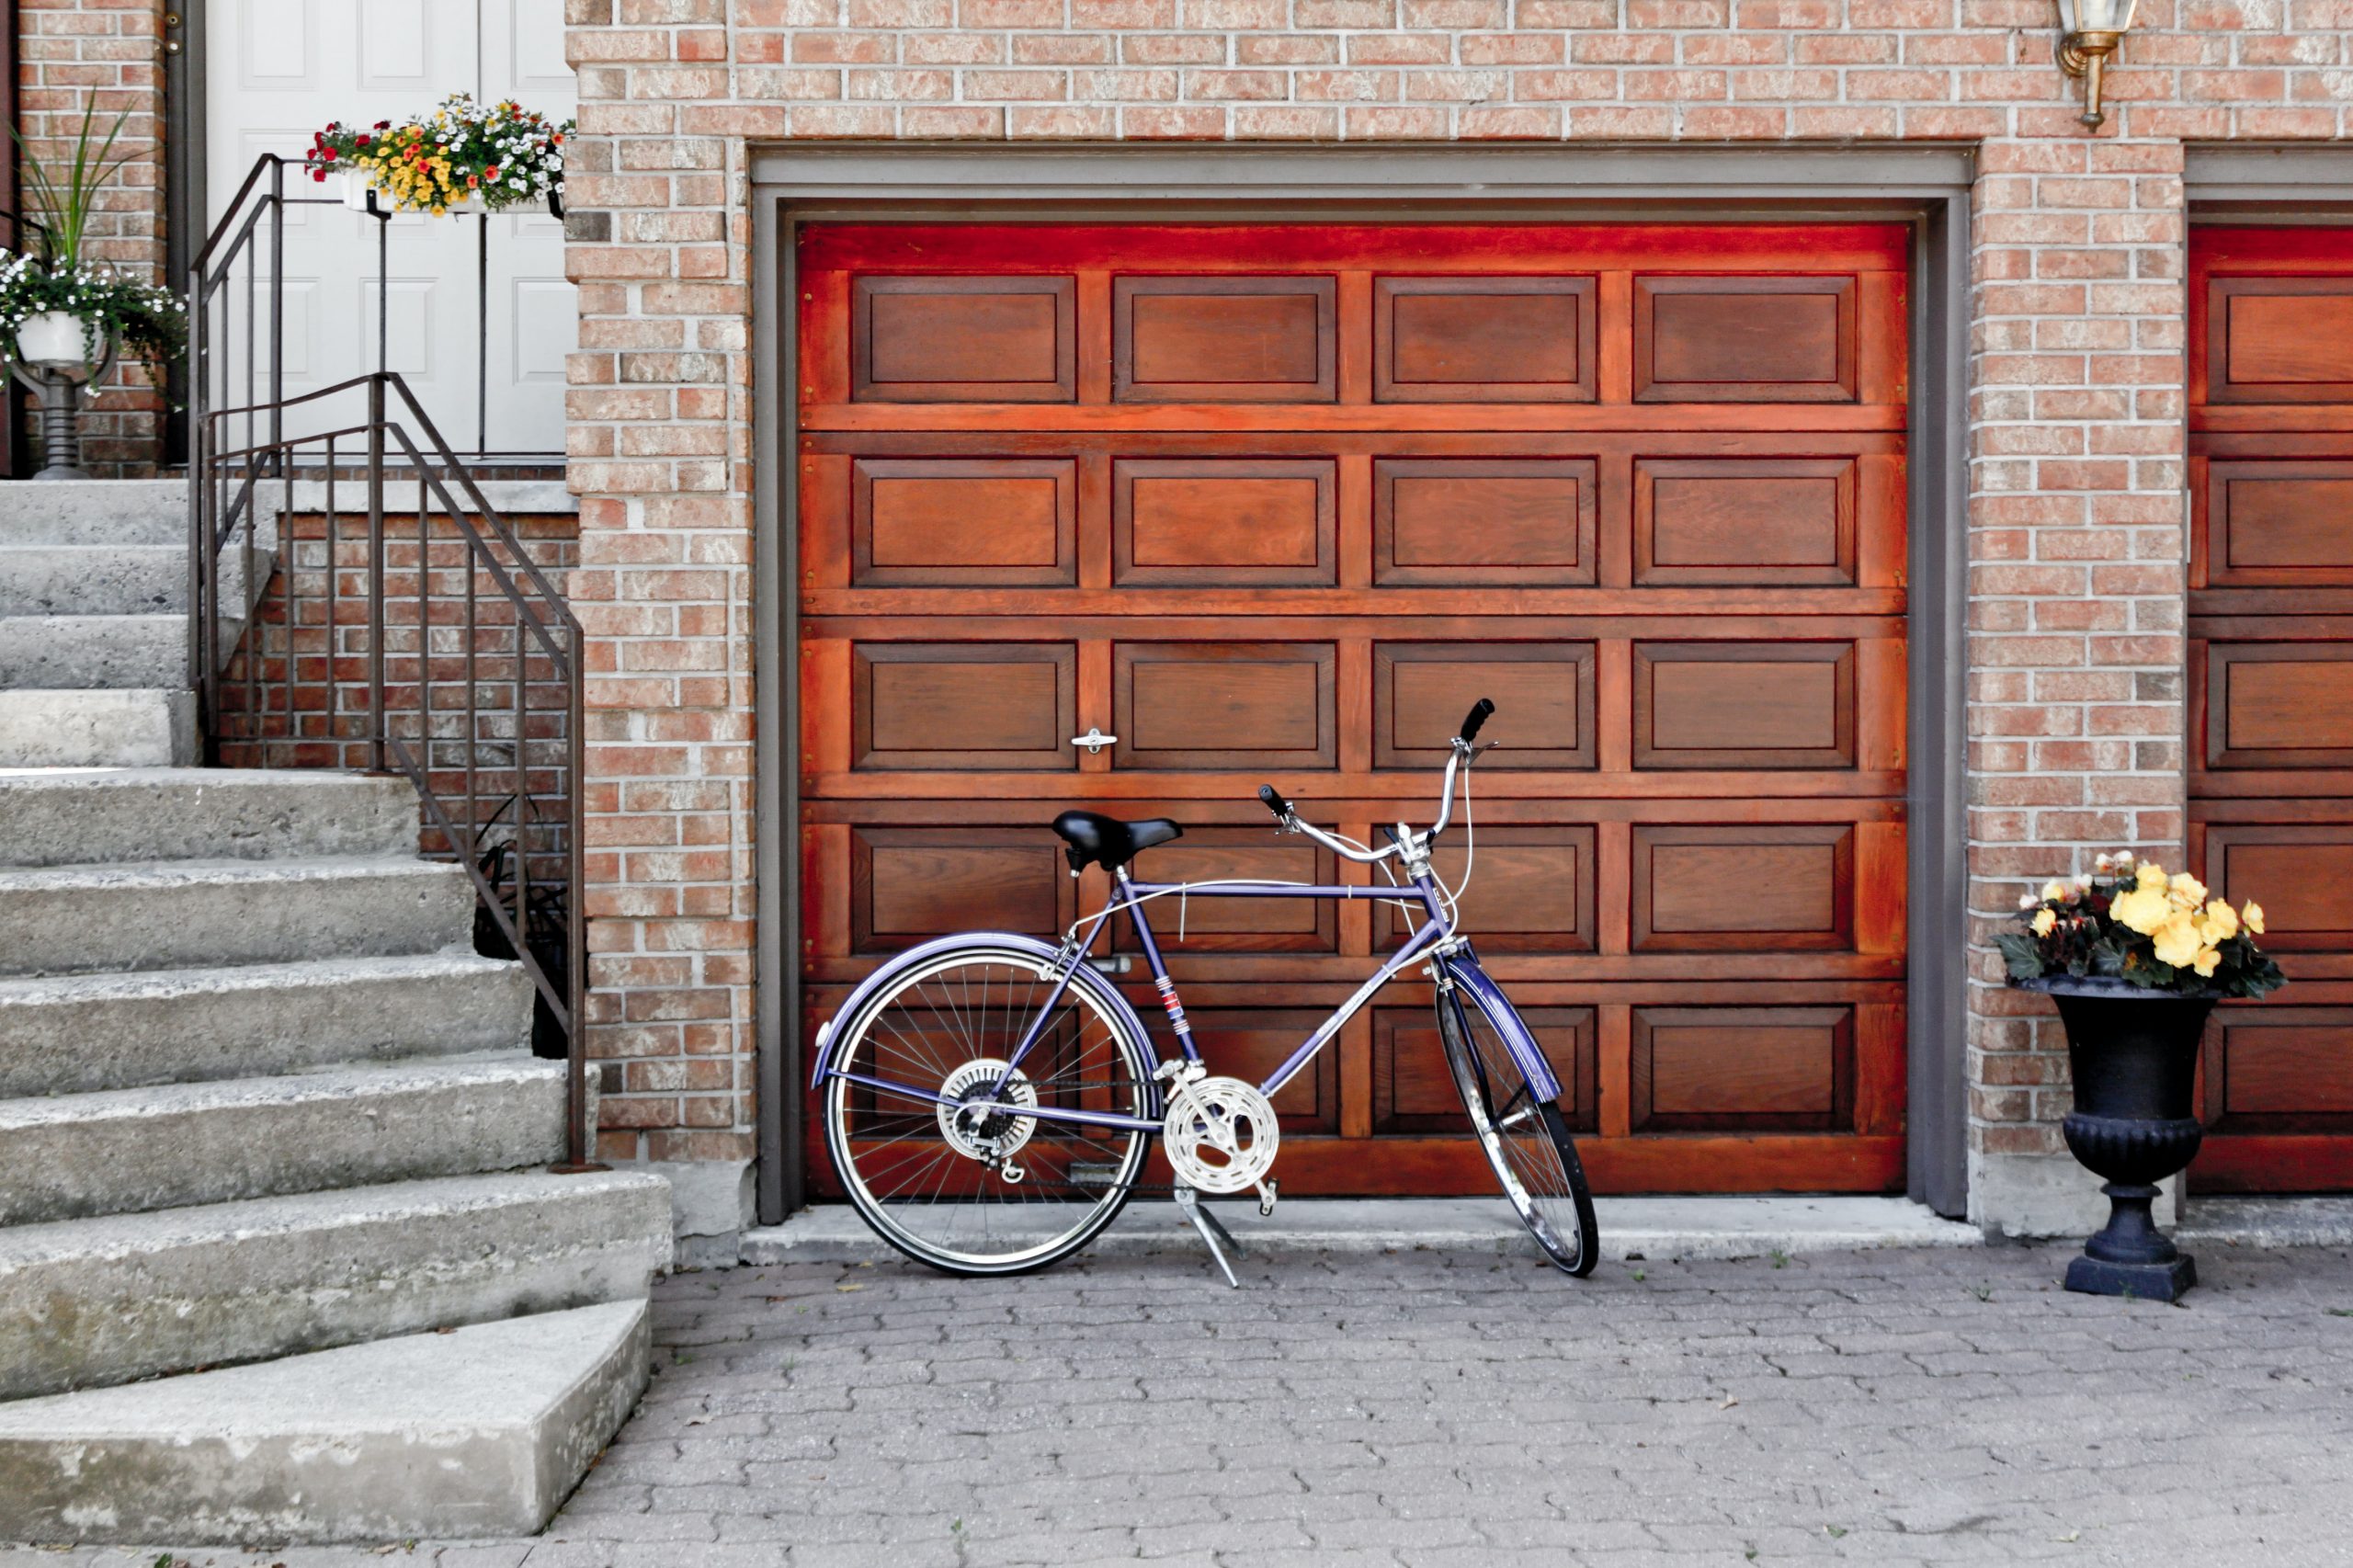 What a broken garage door can reveal about doing good business